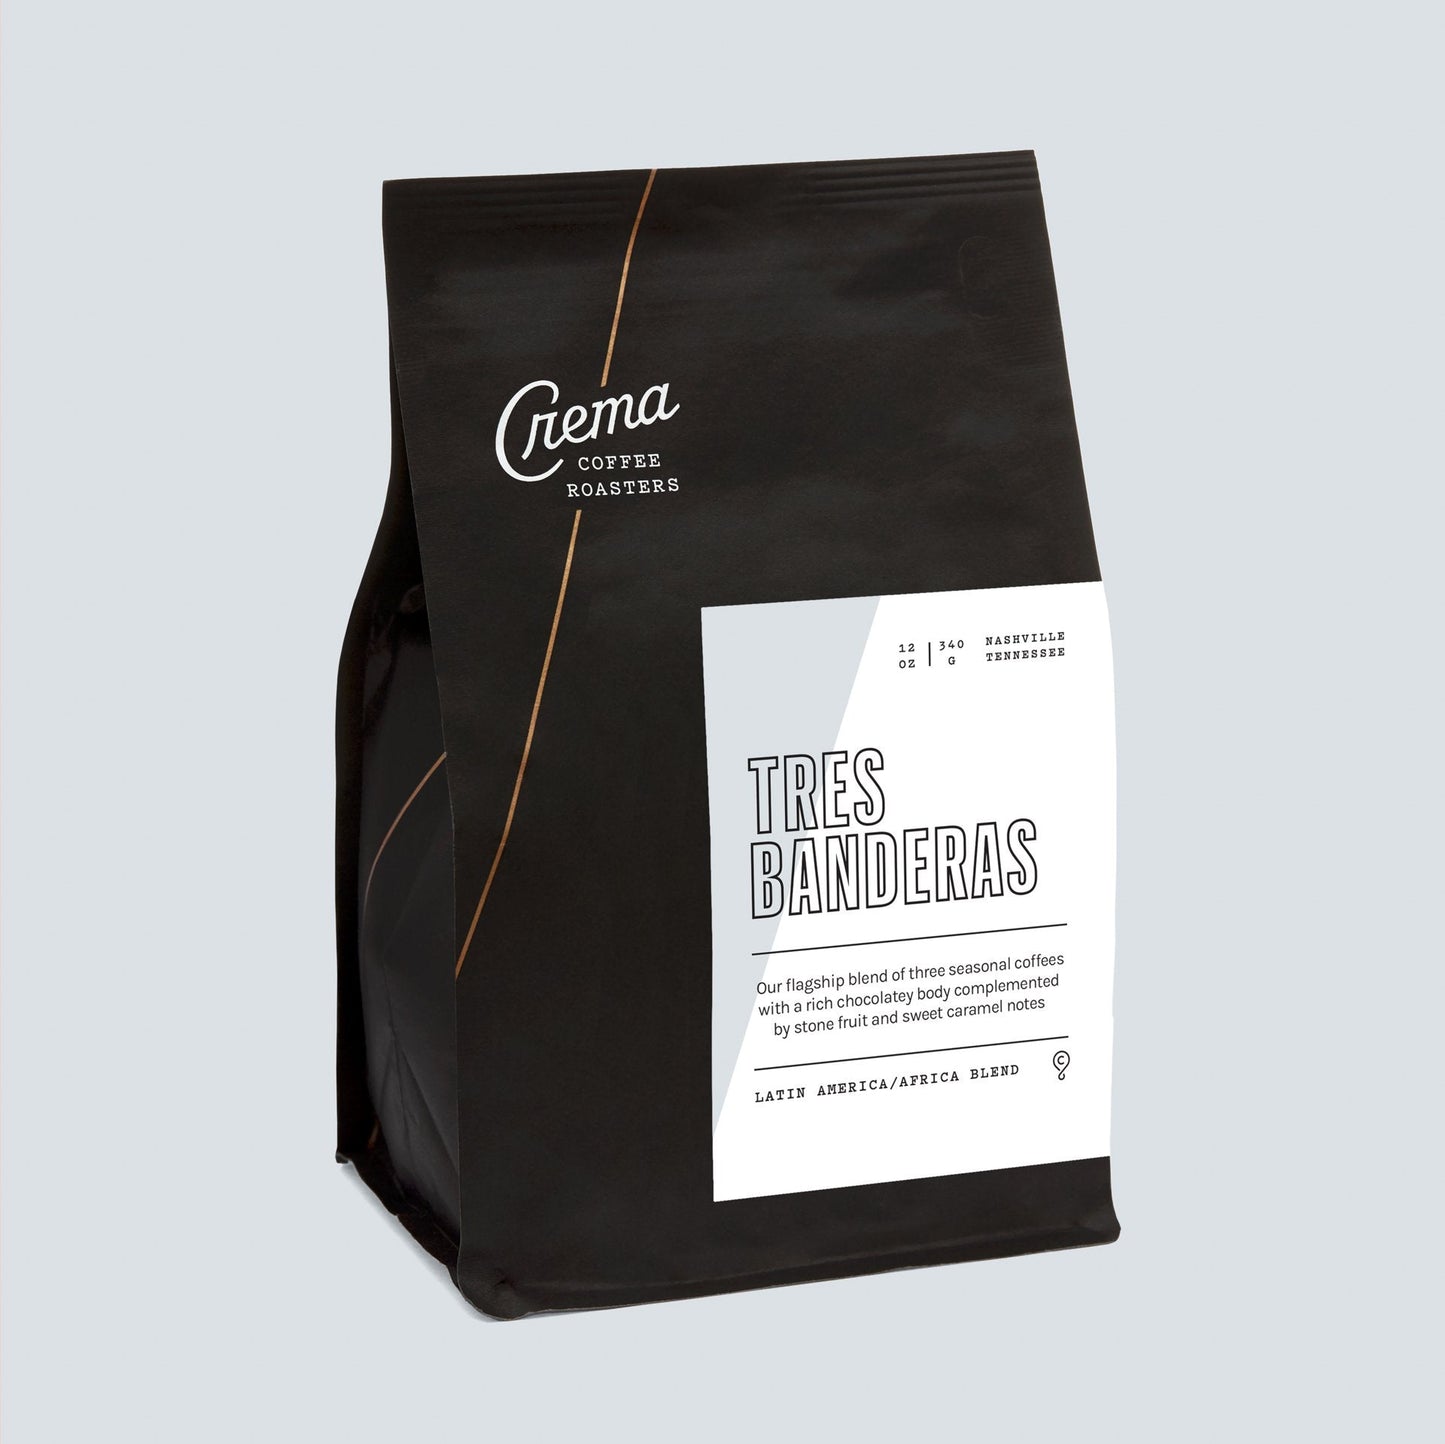 Escali® Alimento Ultra-Accurate Scale – Fresh Roasted Coffee